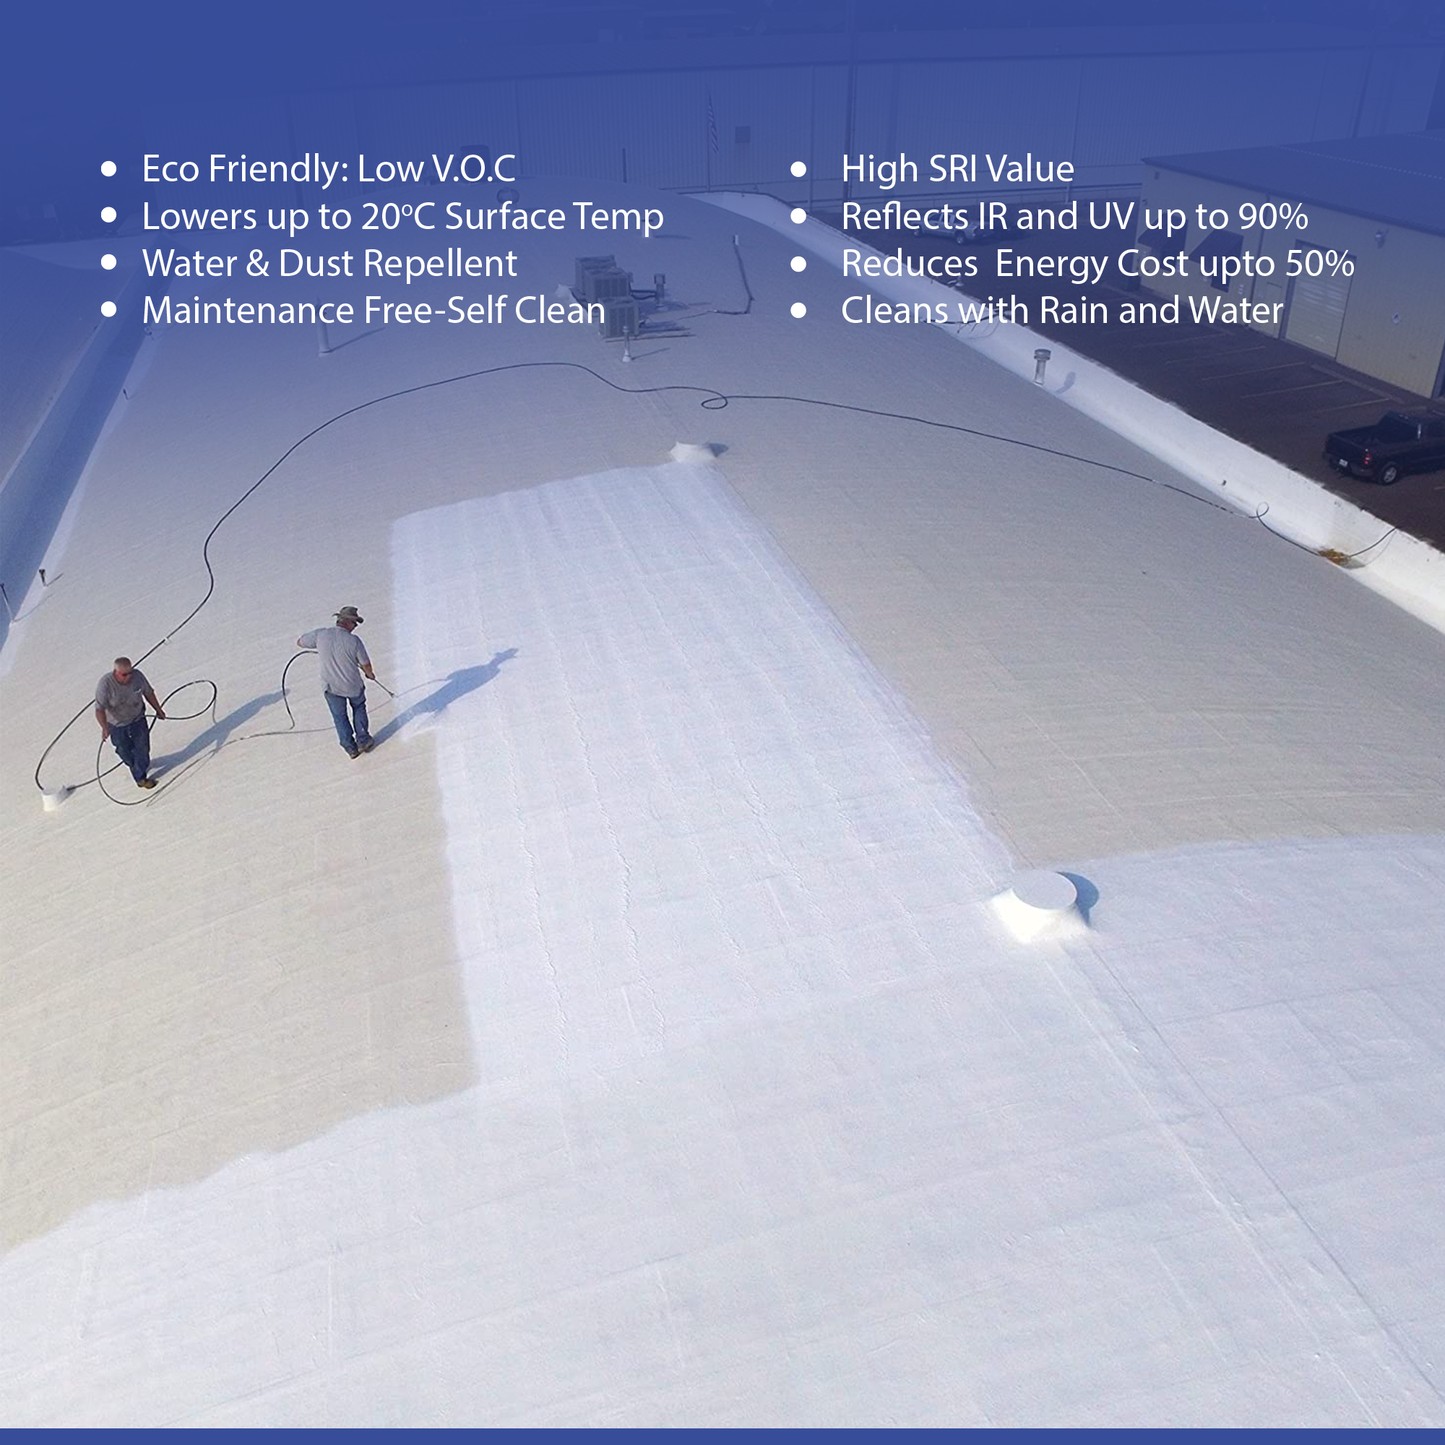 Aegon Cool Roof Coating - High SRI Heat Resistant, Terrace Cooling Paint (10 Ltrs, Covers 250 Sq.ft)